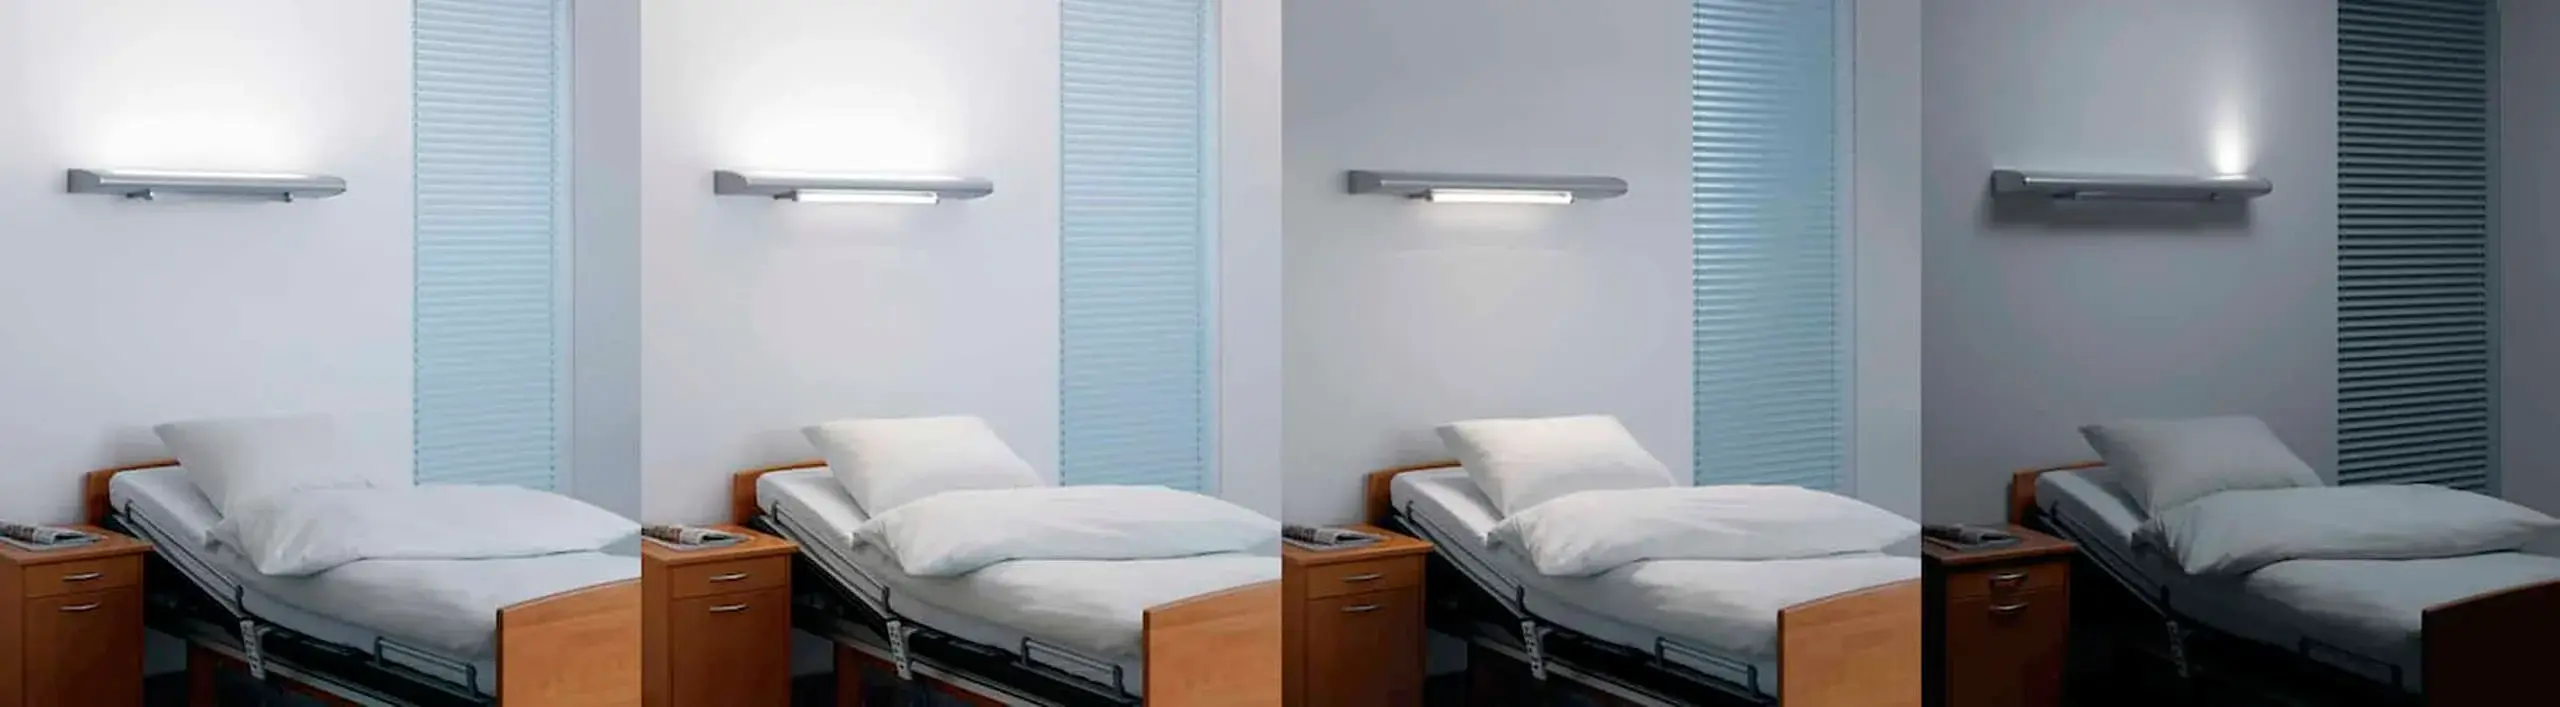 Zumtobel multi-functional hospital light design by Joanna Boothman (npk)